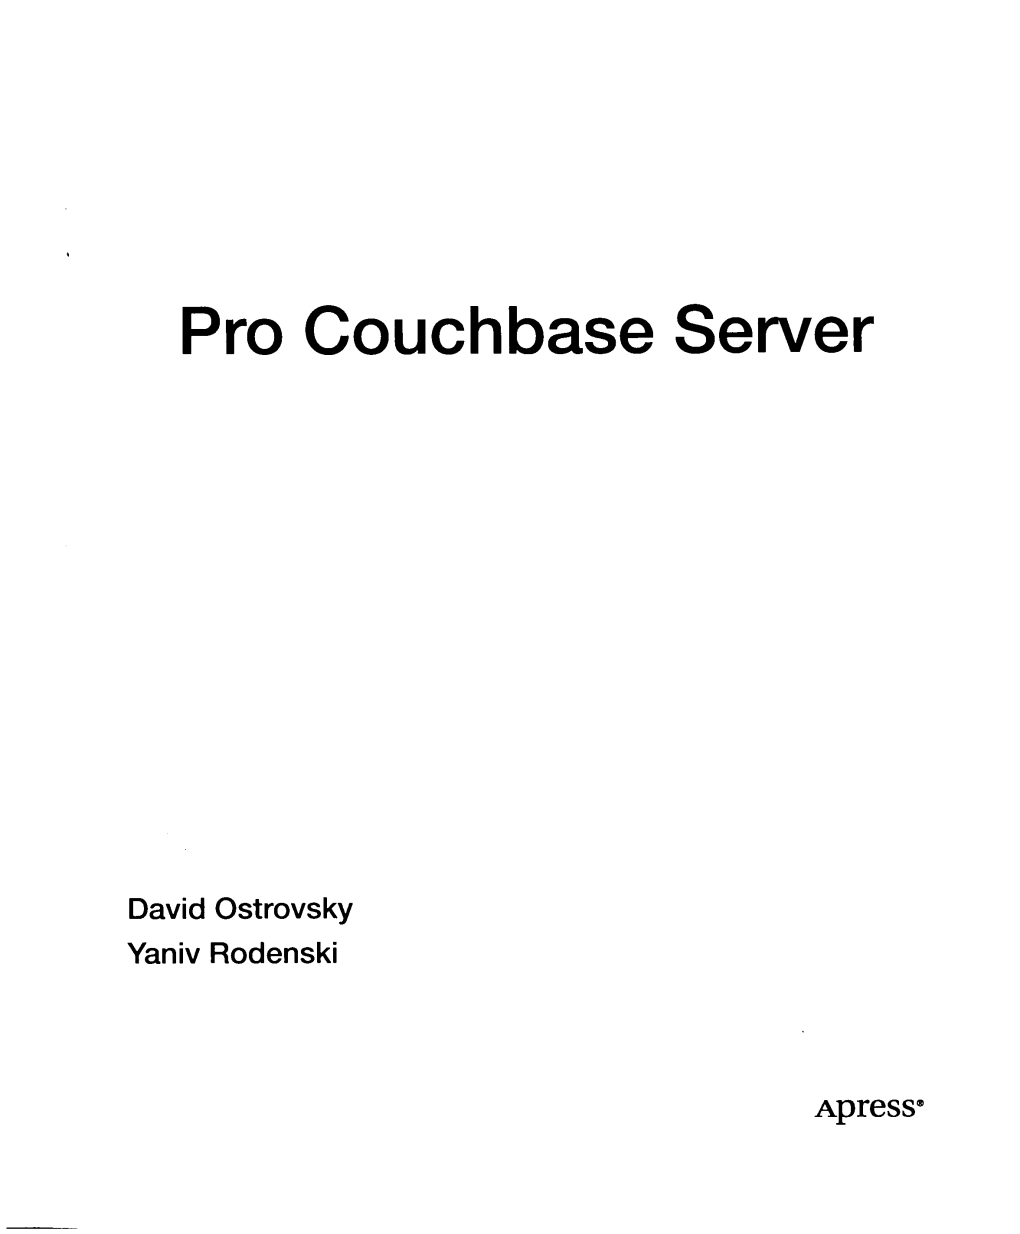 Pro Couchbase Server